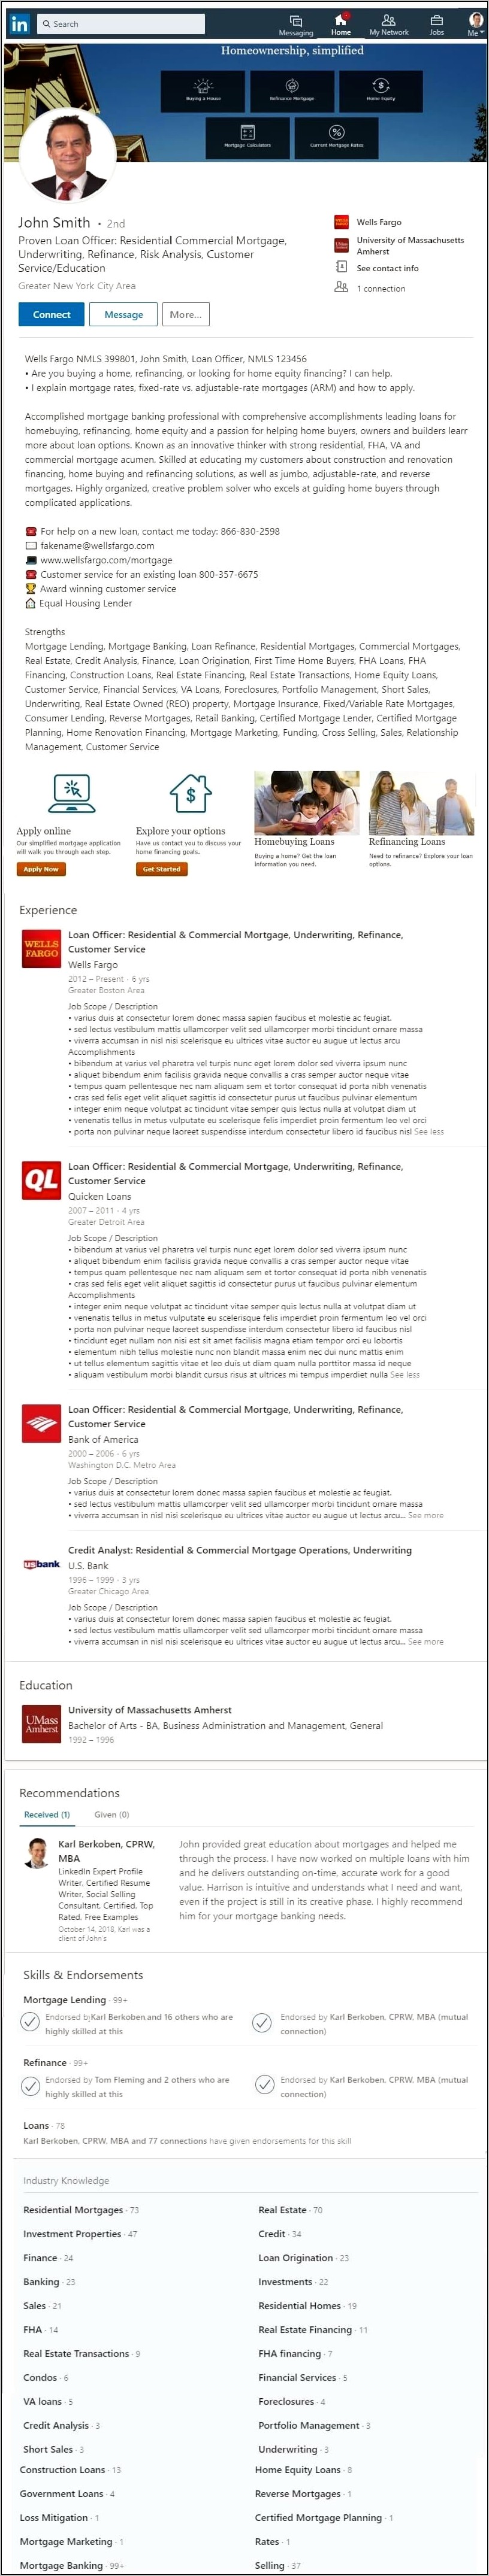 Sample Of Mortgage Loan Officer Resume